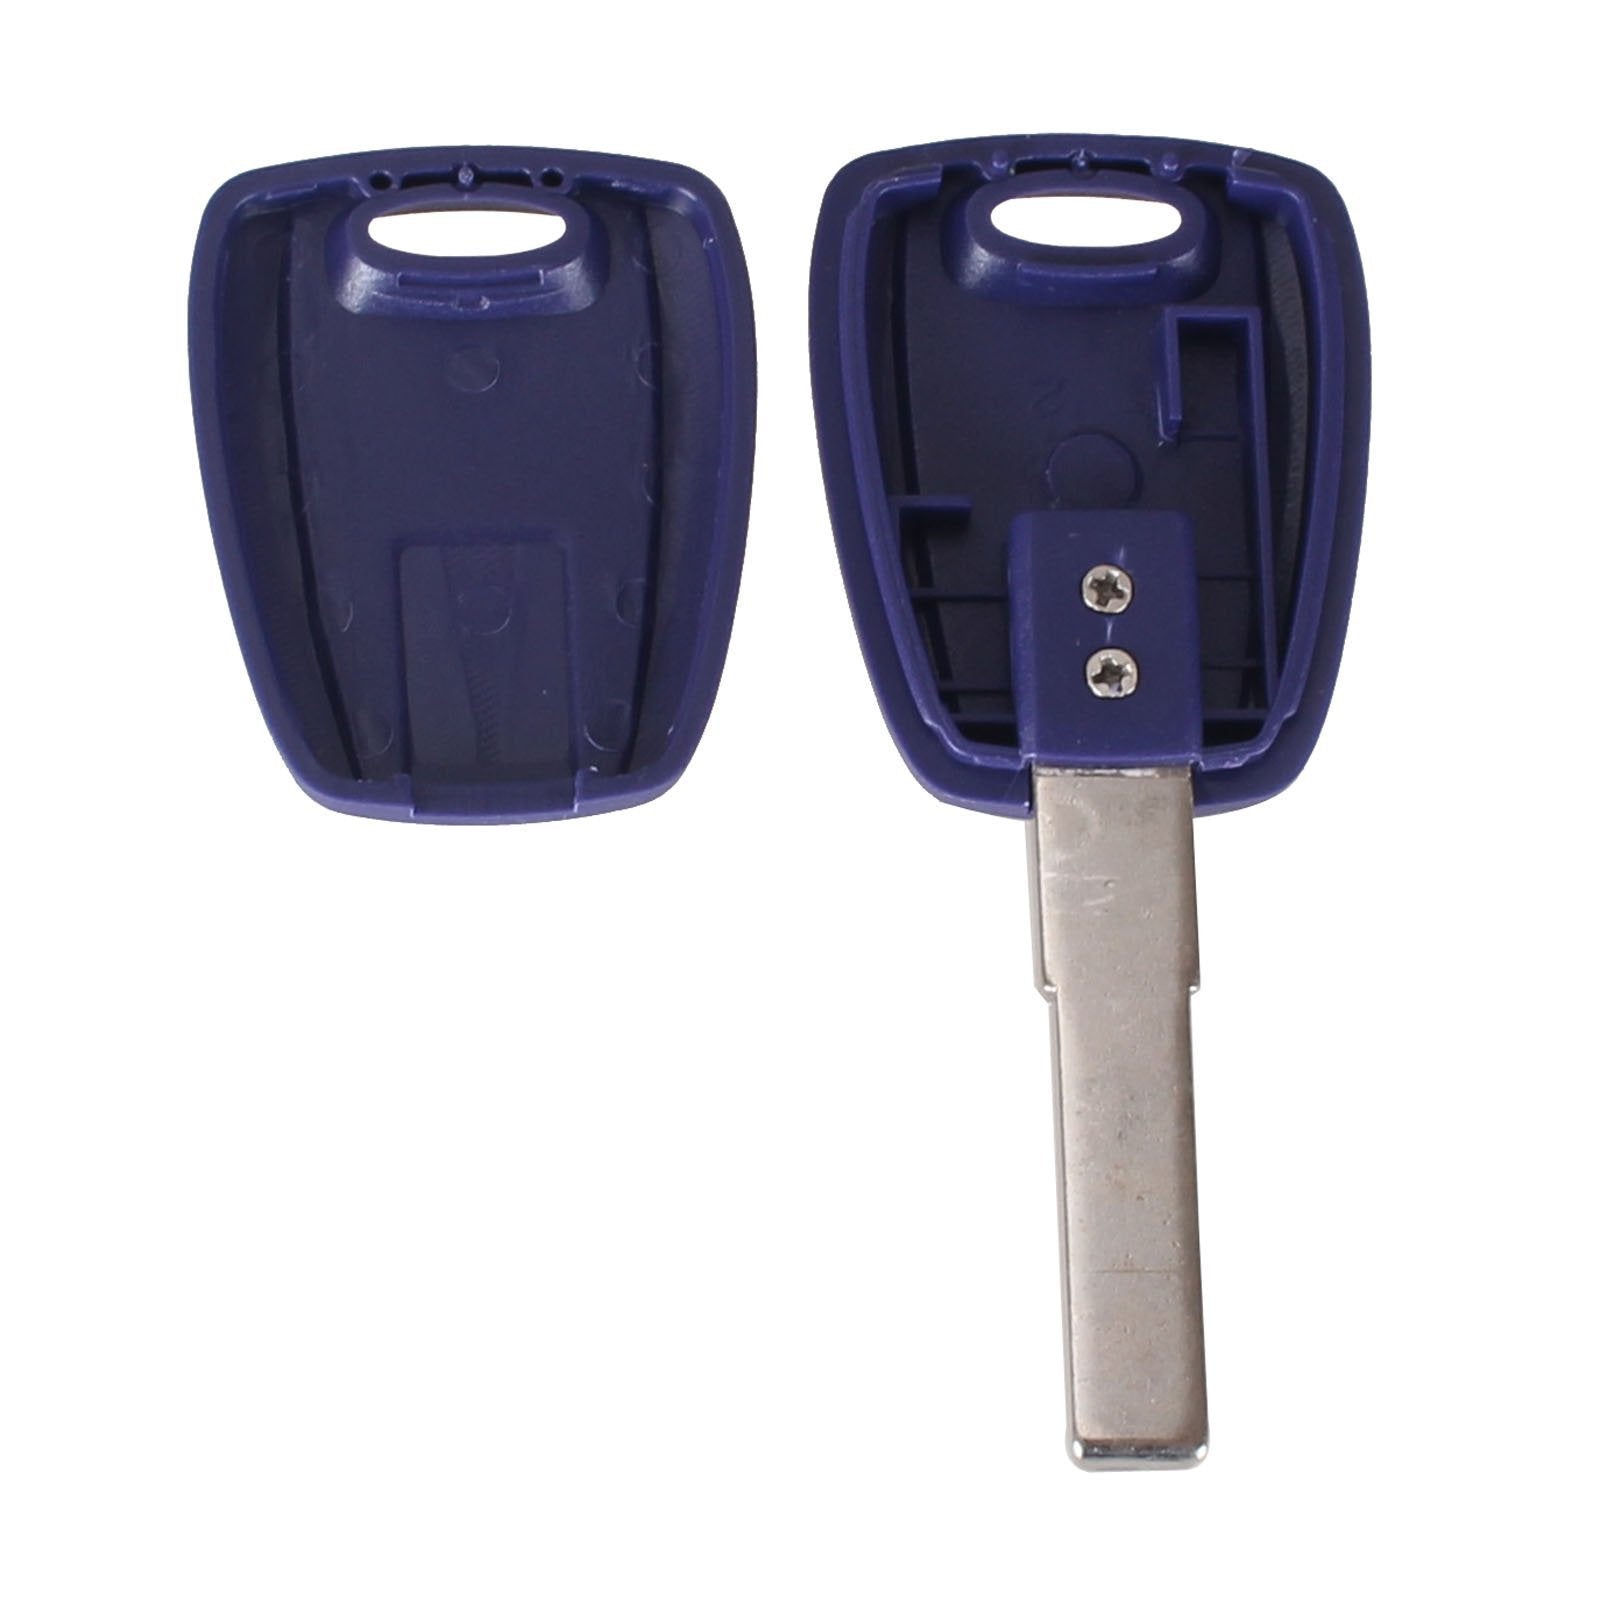 Kék színű Fiat kulcs, kulcsház belseje. SIP22 kulcsszárral.